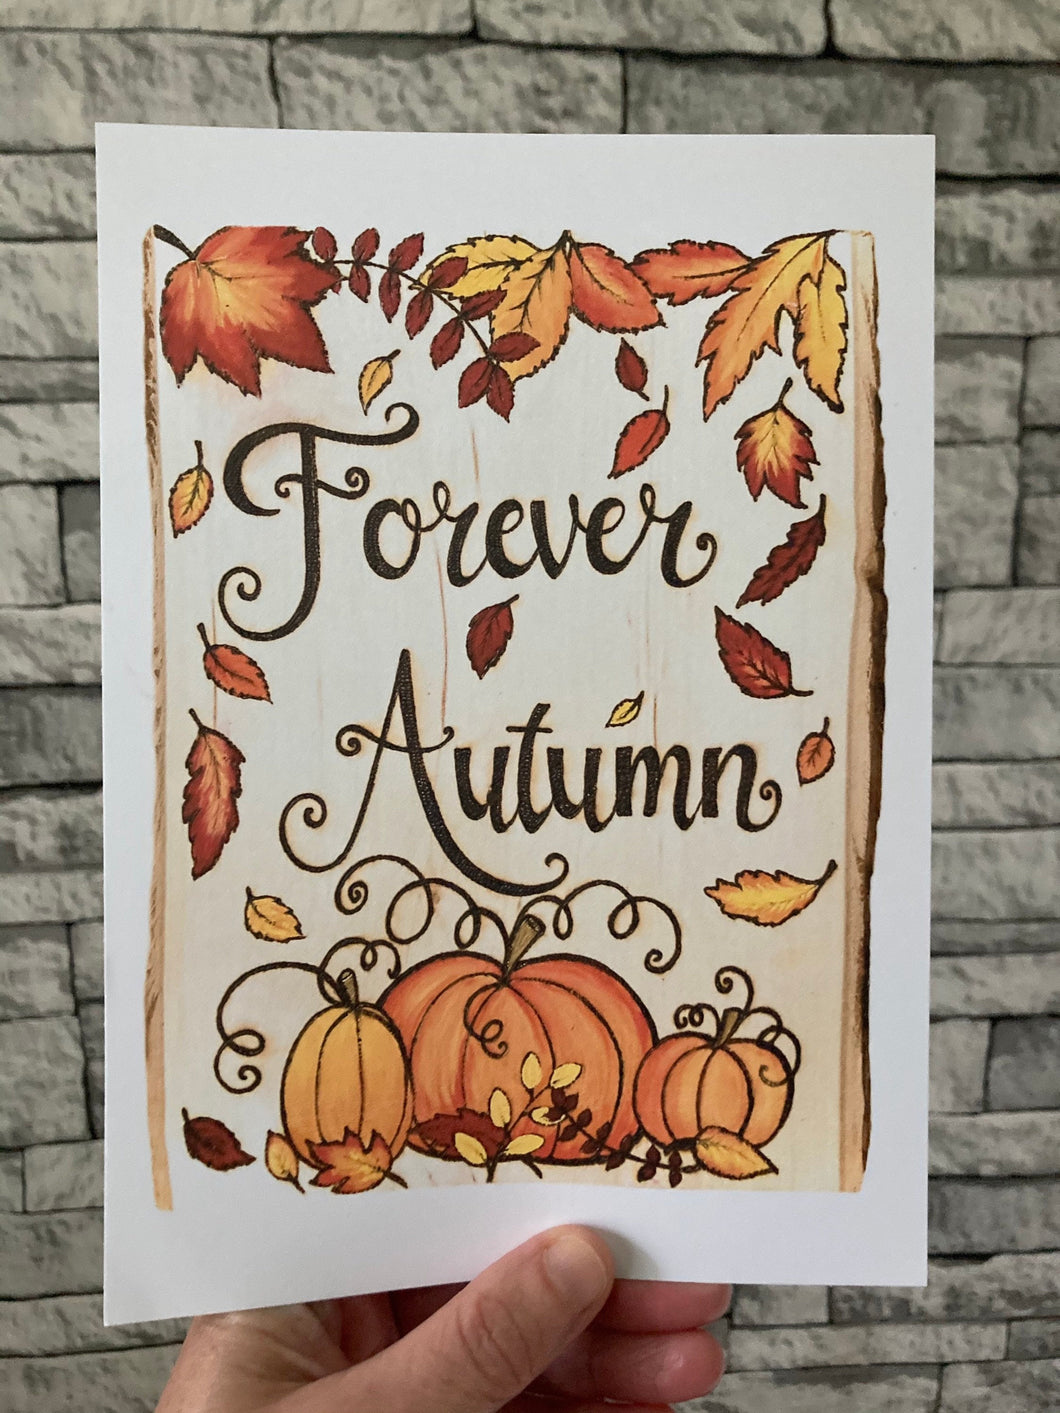 Forever Autumn Print